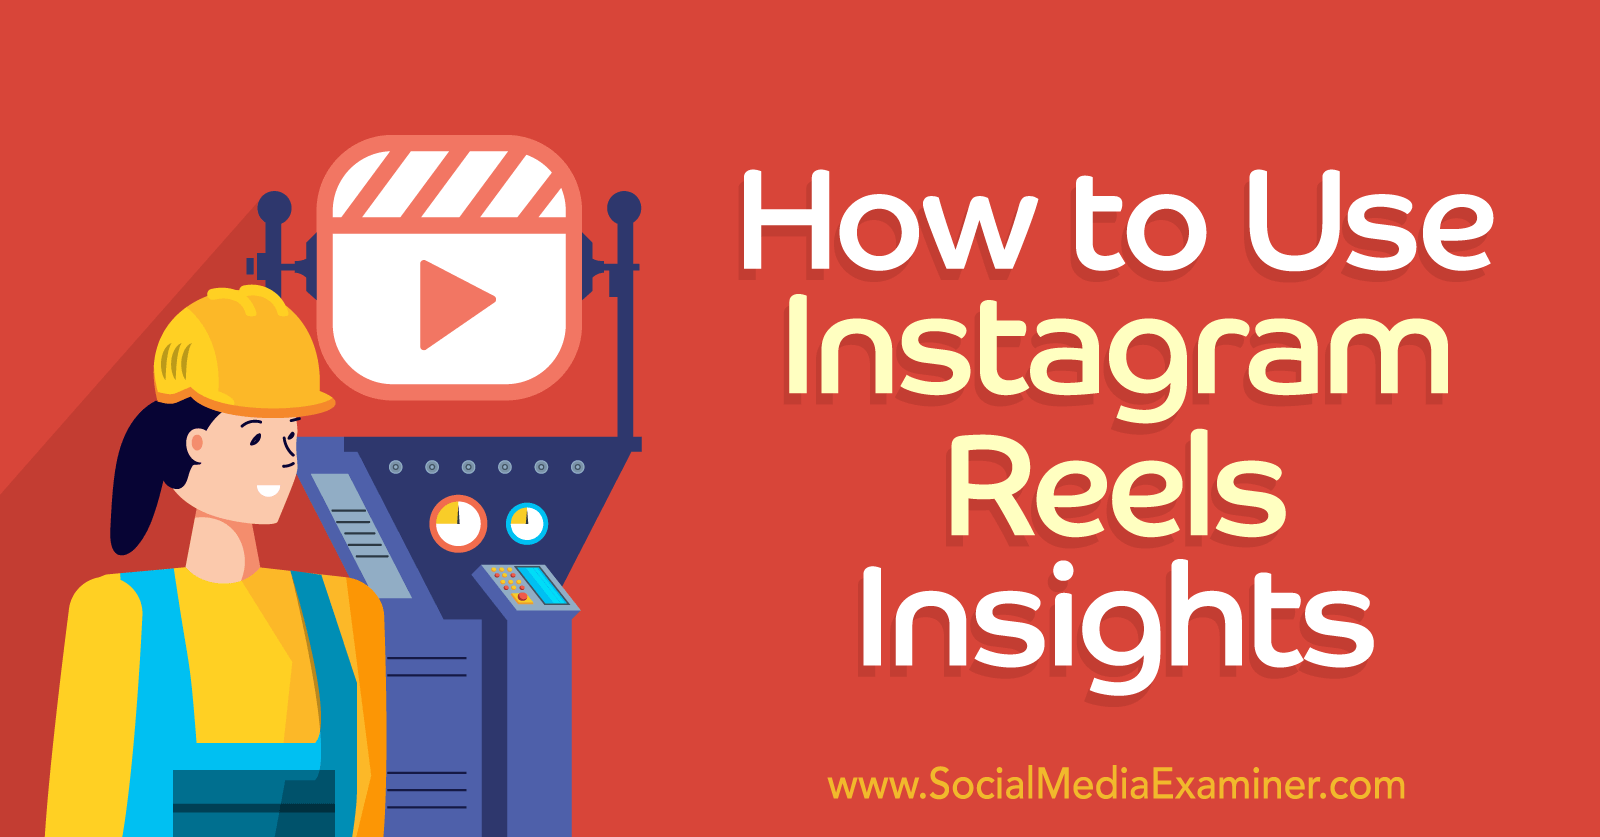 How to Use Instagram Reels Insights-Social Media Examiner